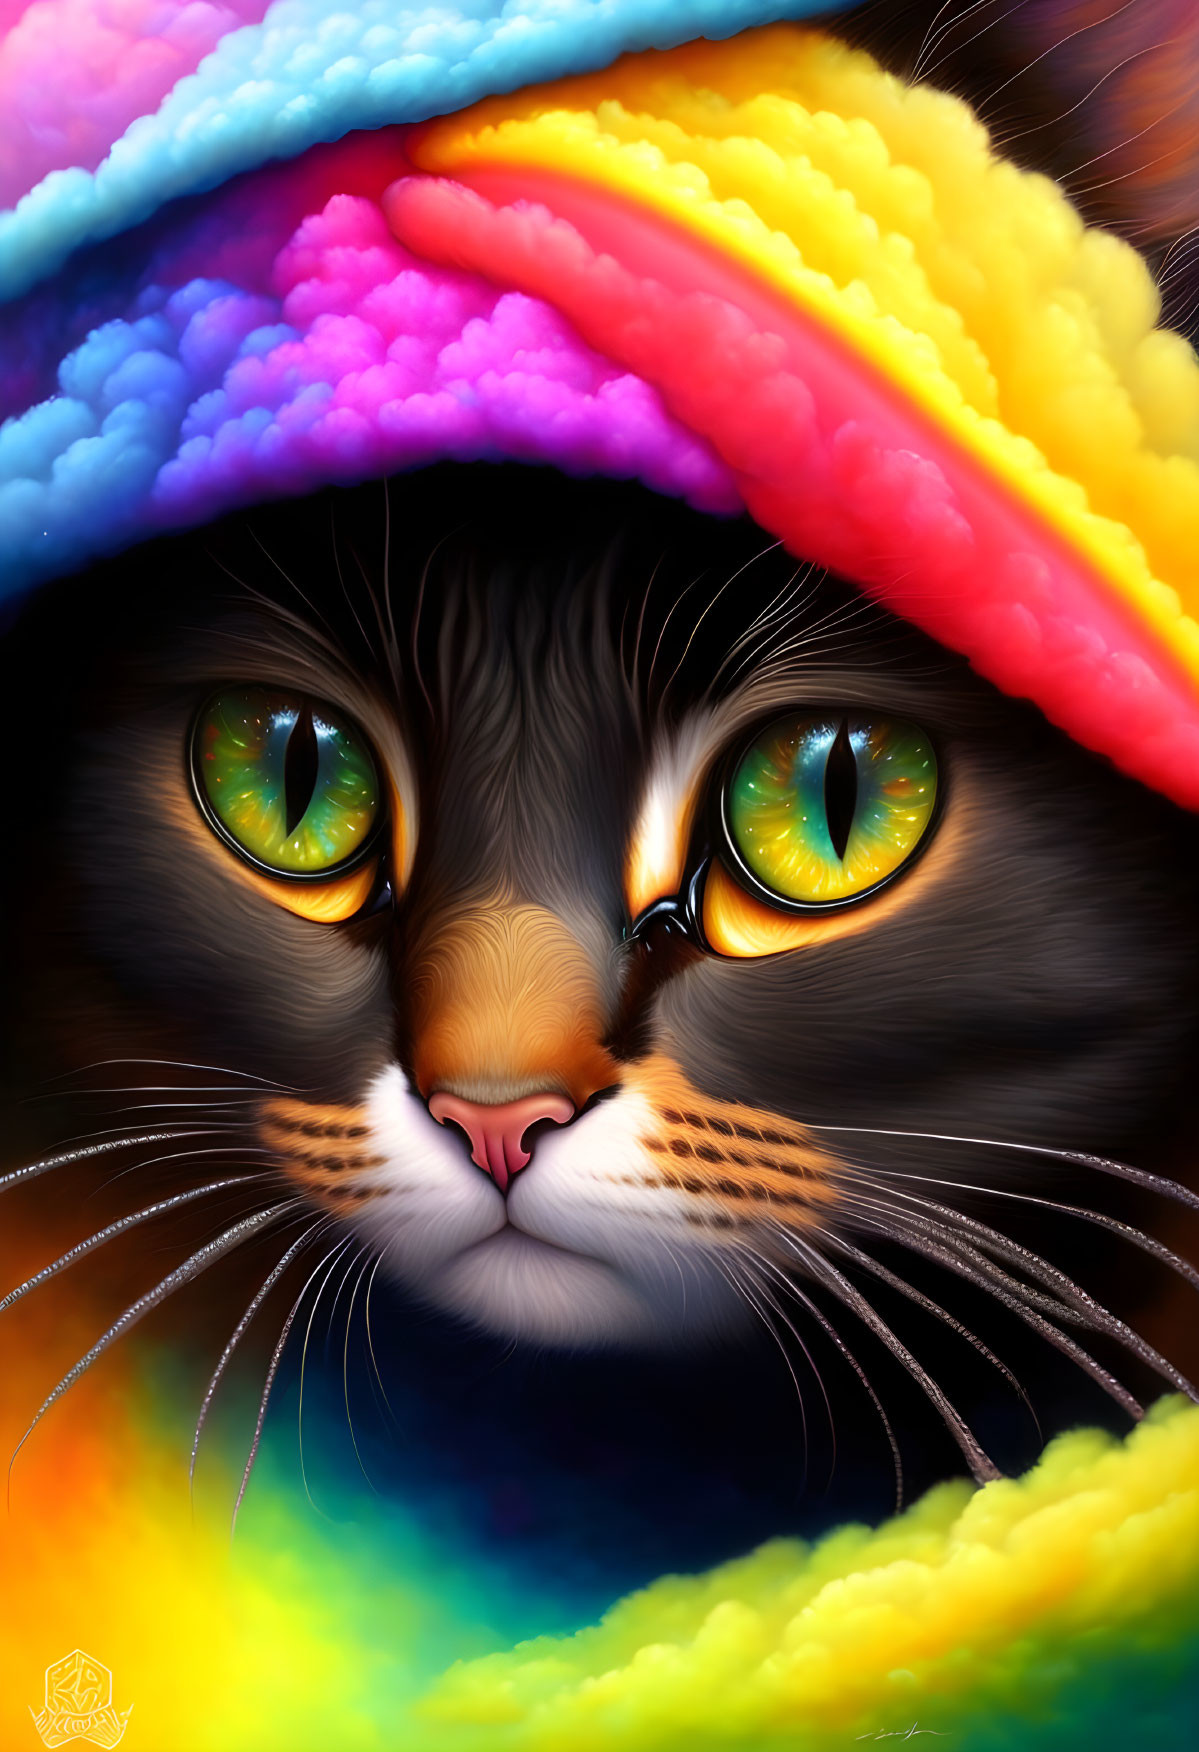 Colorful Cat Portrait with Rainbow Hat